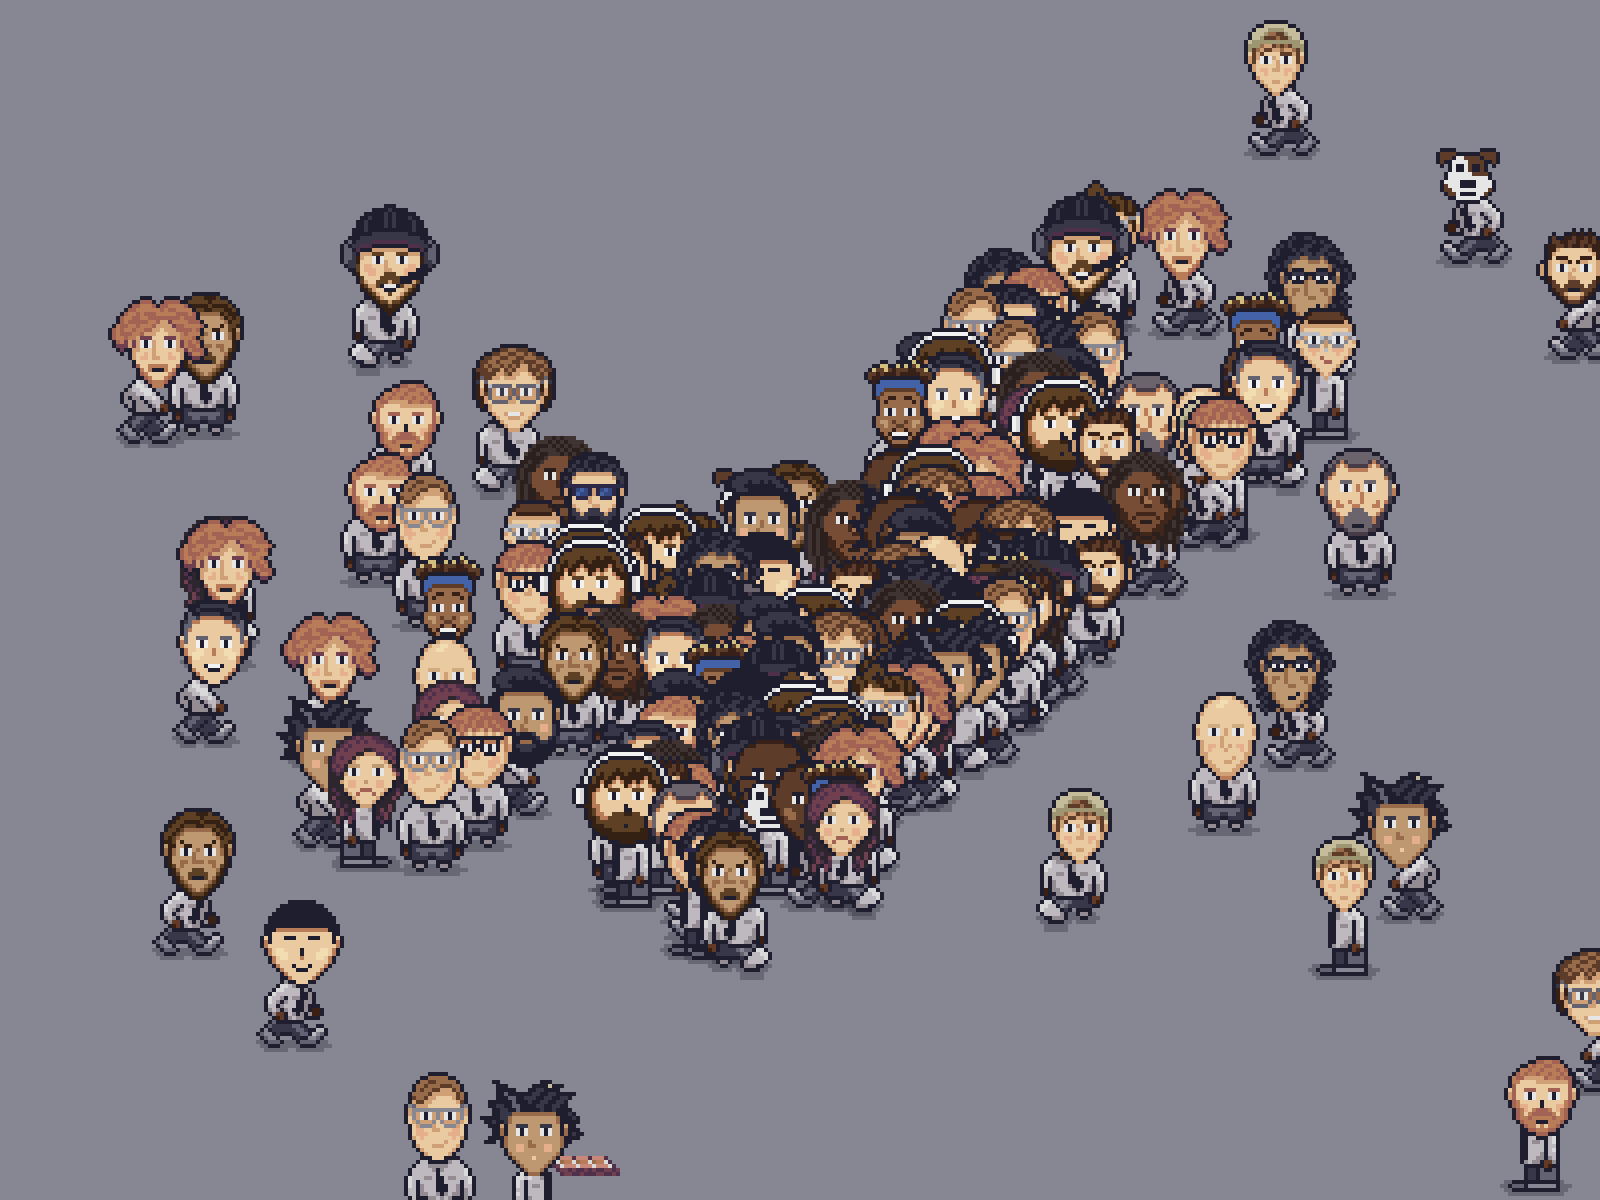 pixel art characters walking close together